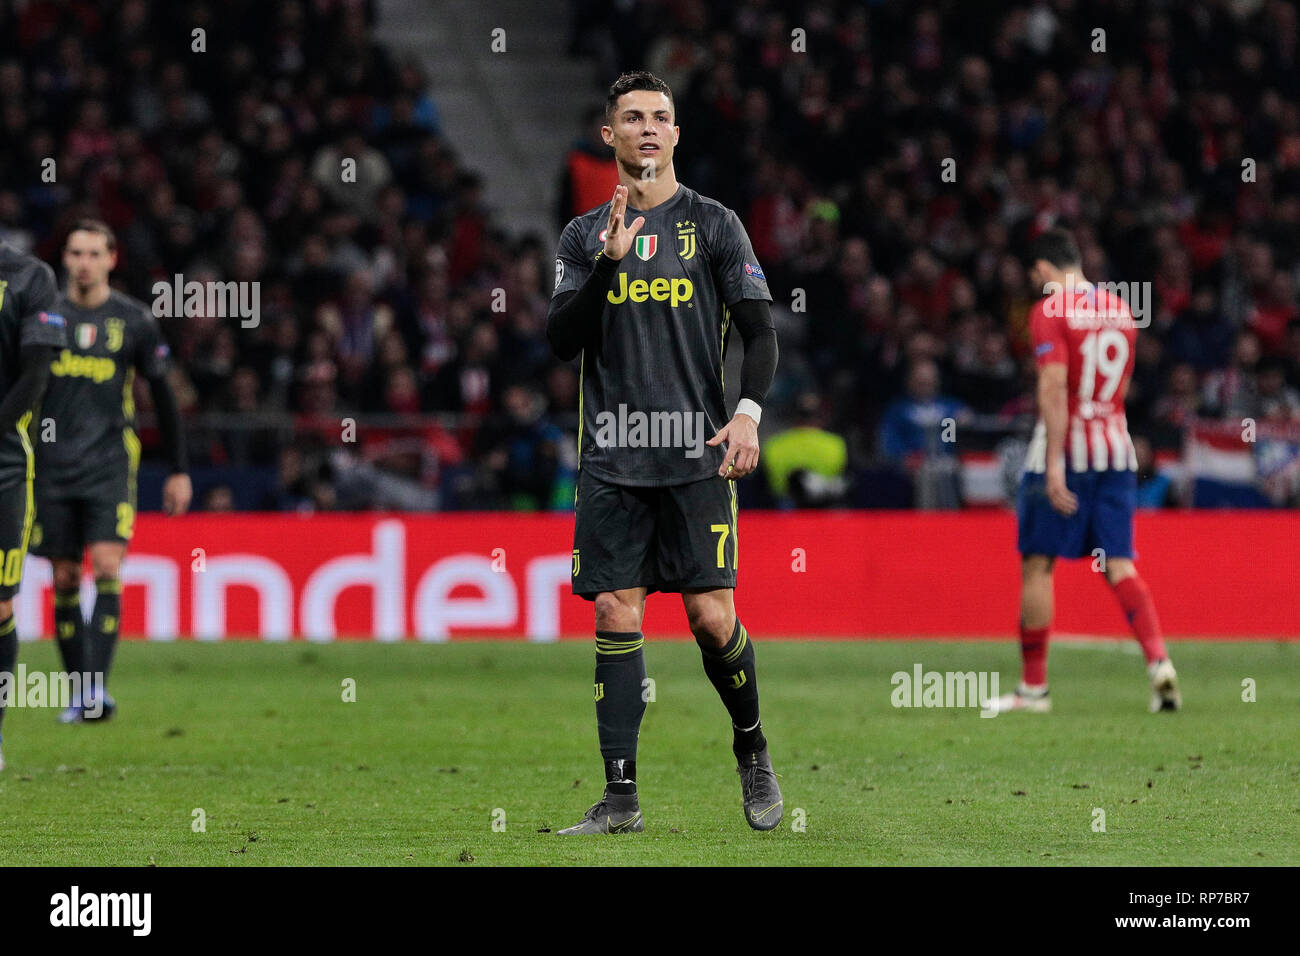 Juventus' Cristiano Ronaldo seen during the UEFA Champions League match, Round of 16, 1st leg between Atletico de Madrid and Juventus at Wanda Metropolitano Stadium in Madrid, Spain. Stock Photo